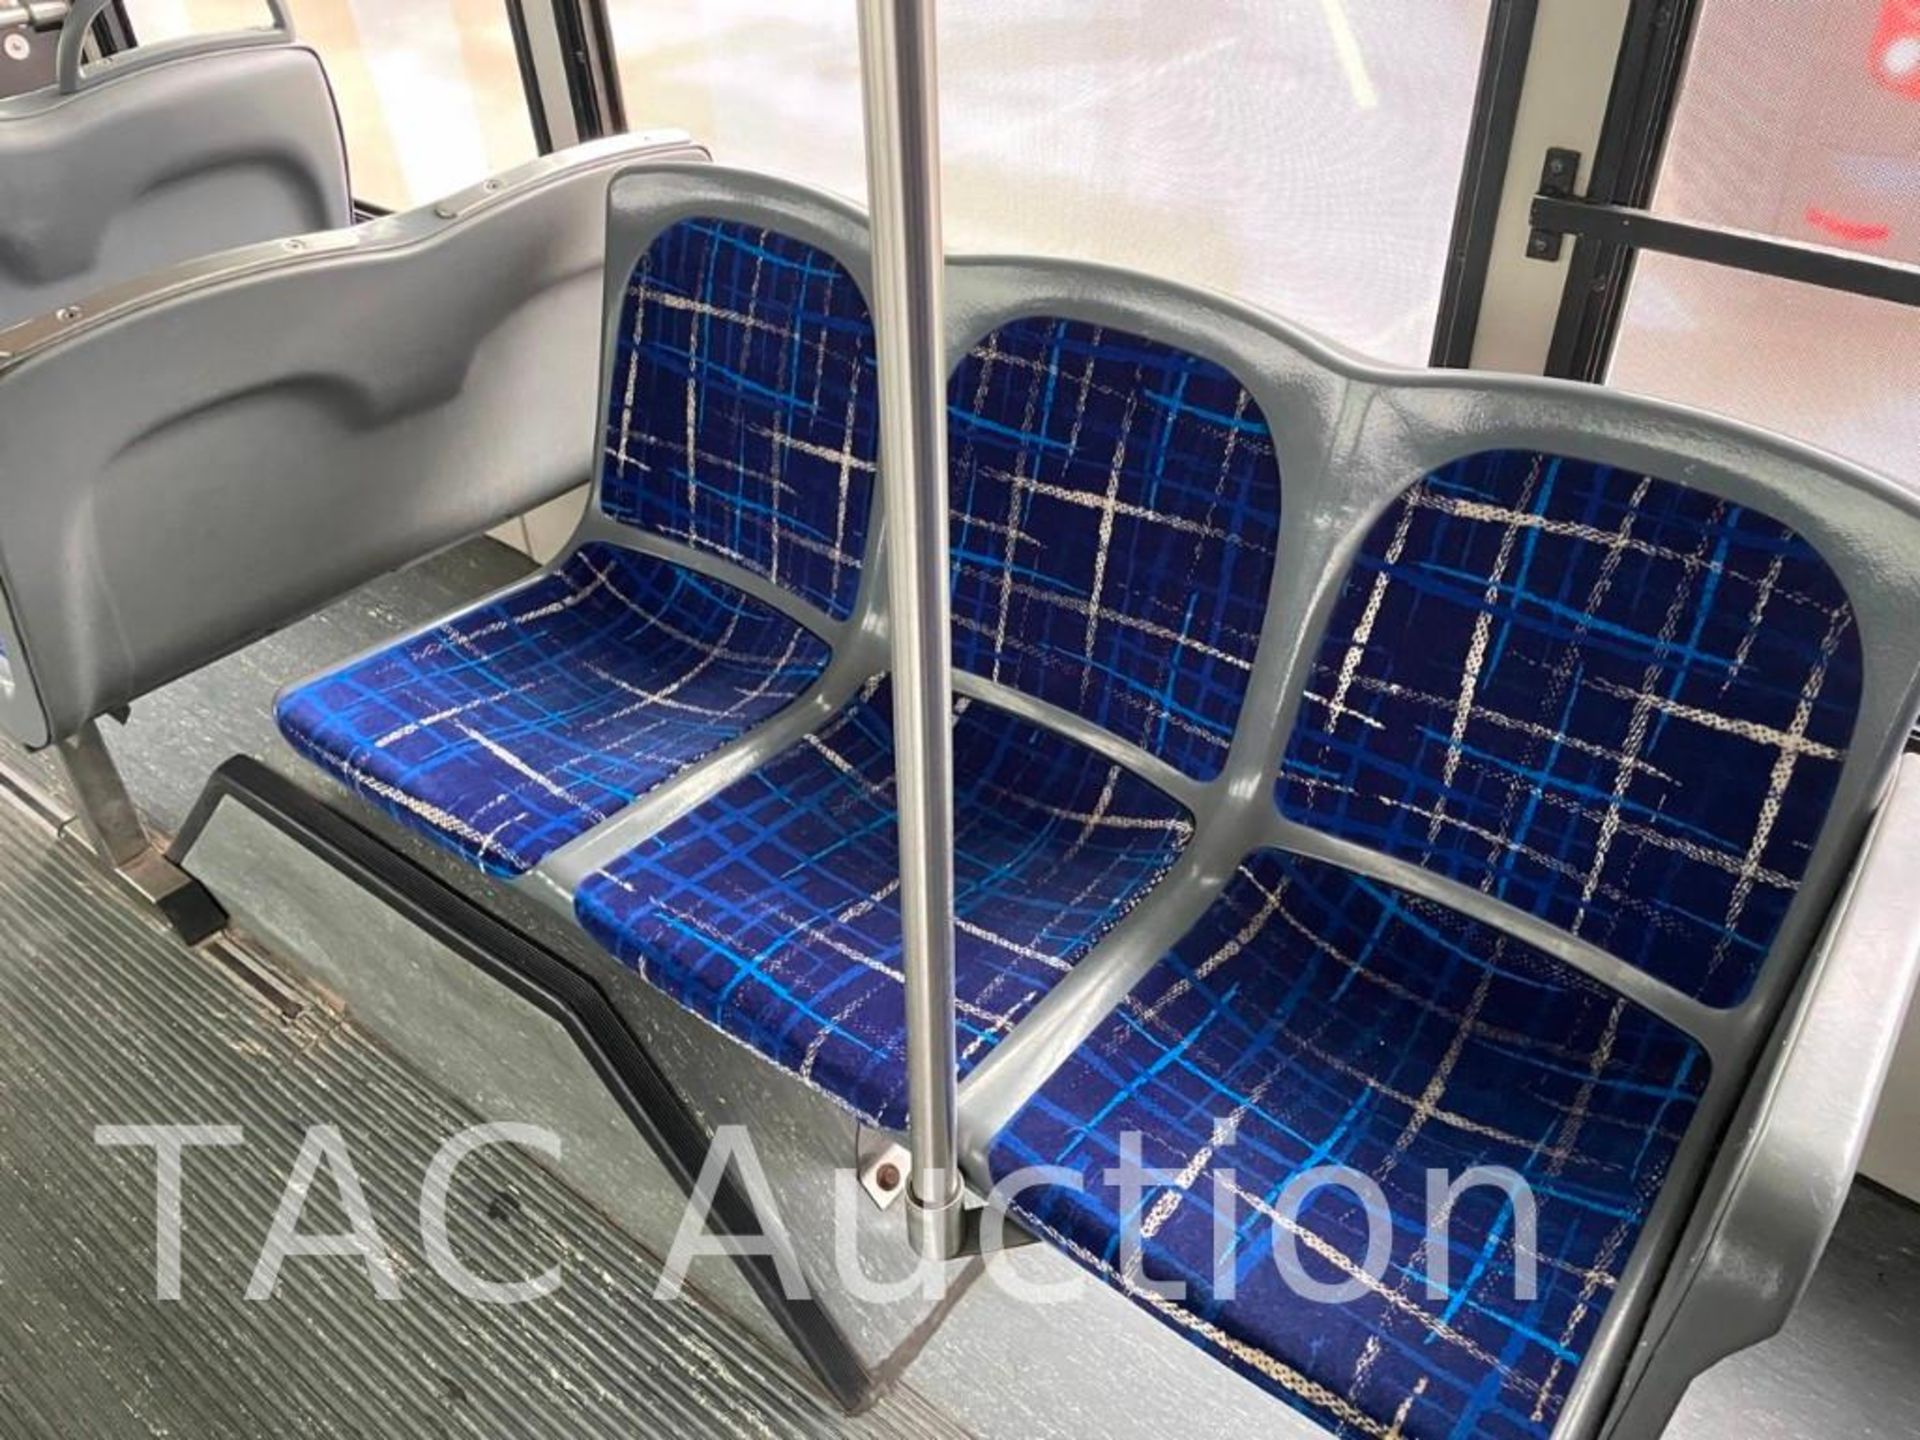 2005 Gillig Low Floor (40) Passenger Coach Transit Bus - Image 59 of 91